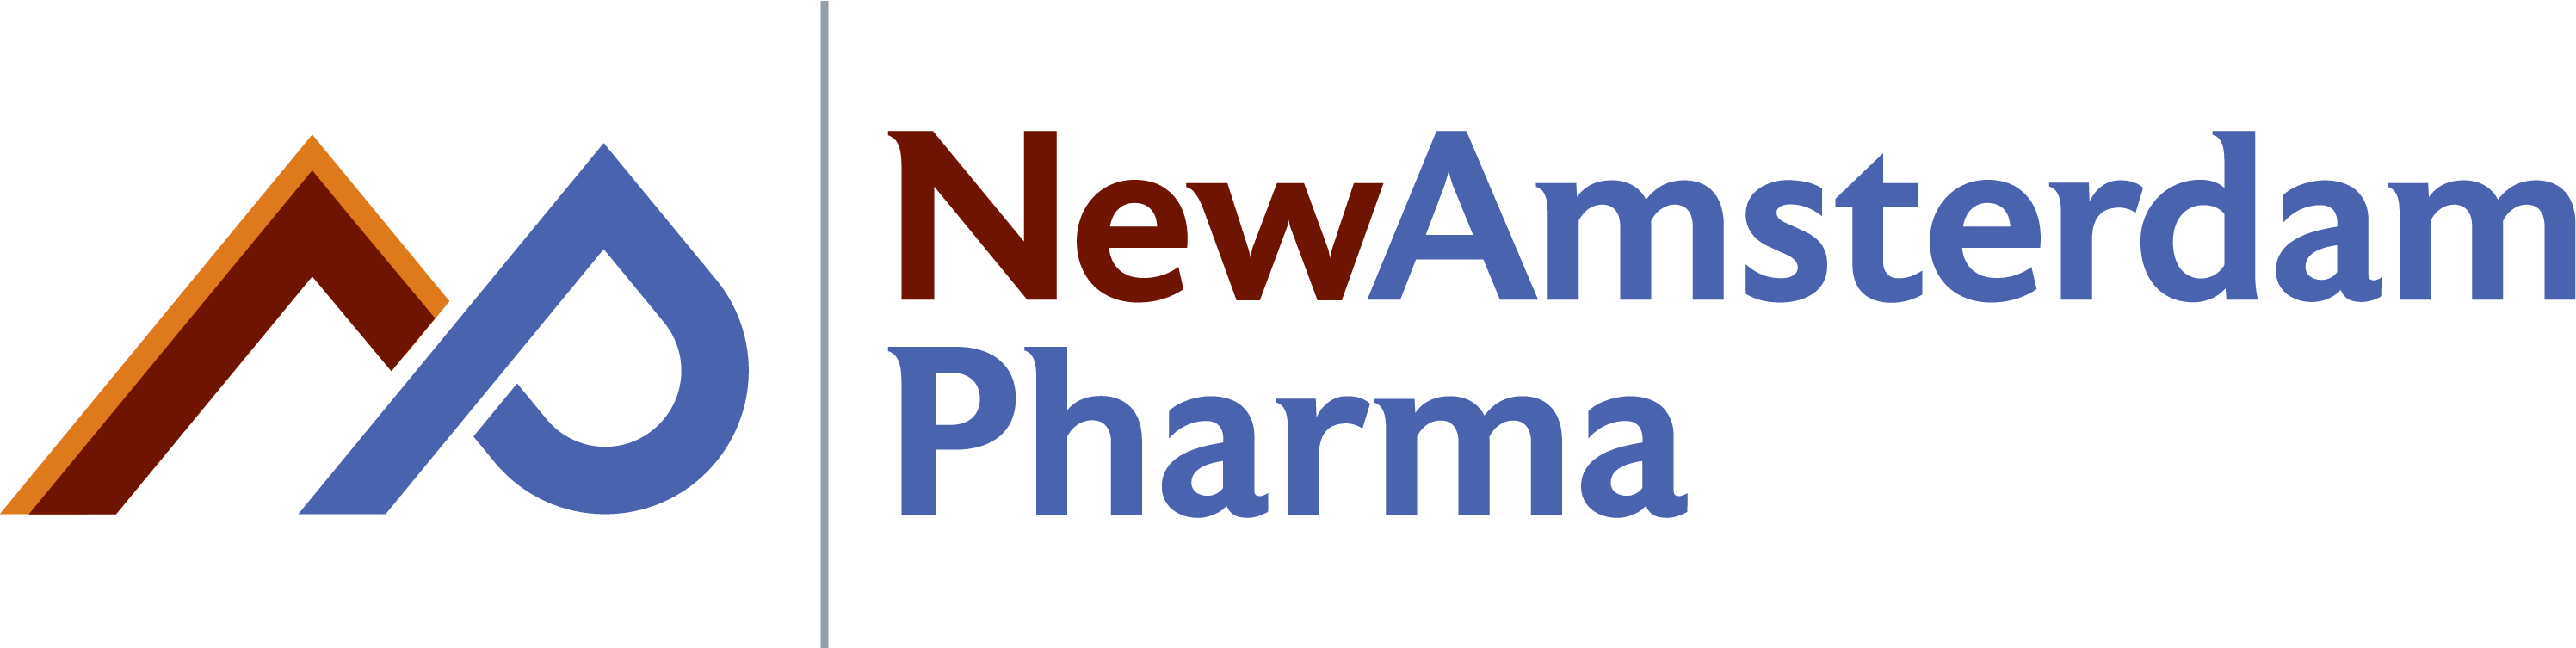 New Amsterdam Pharma logo